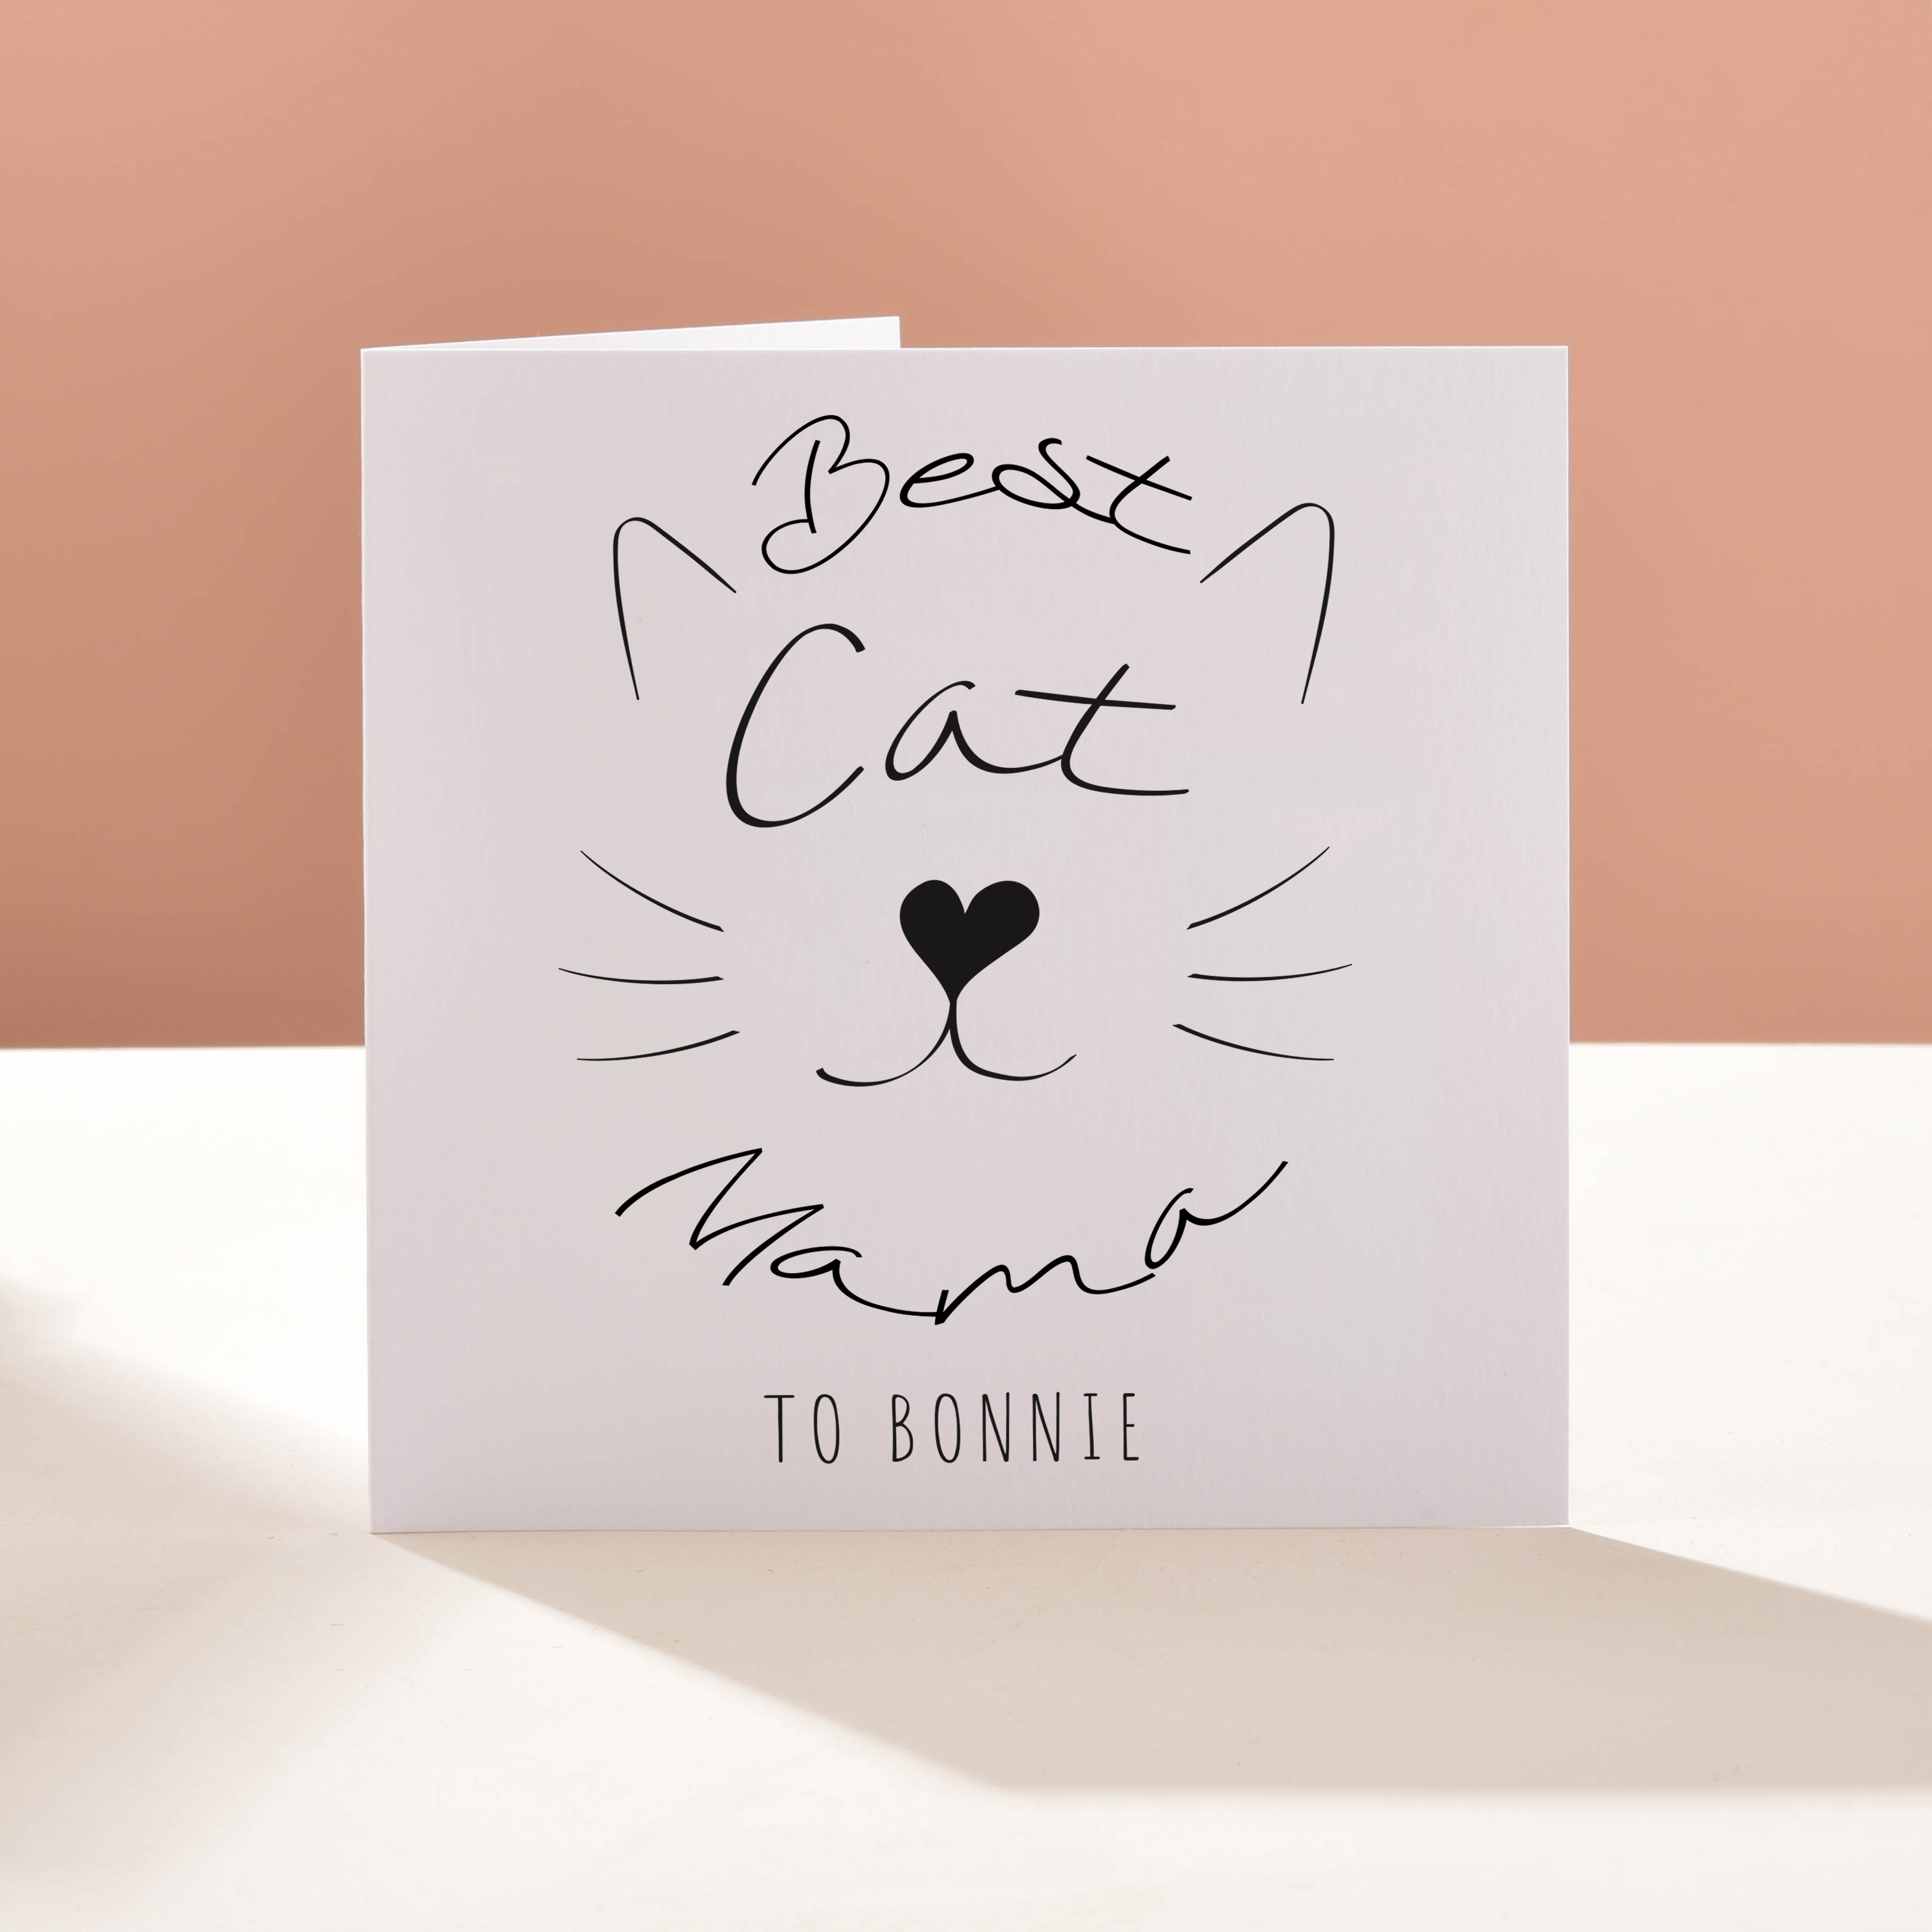 Personalised Card - Best Cat Mama